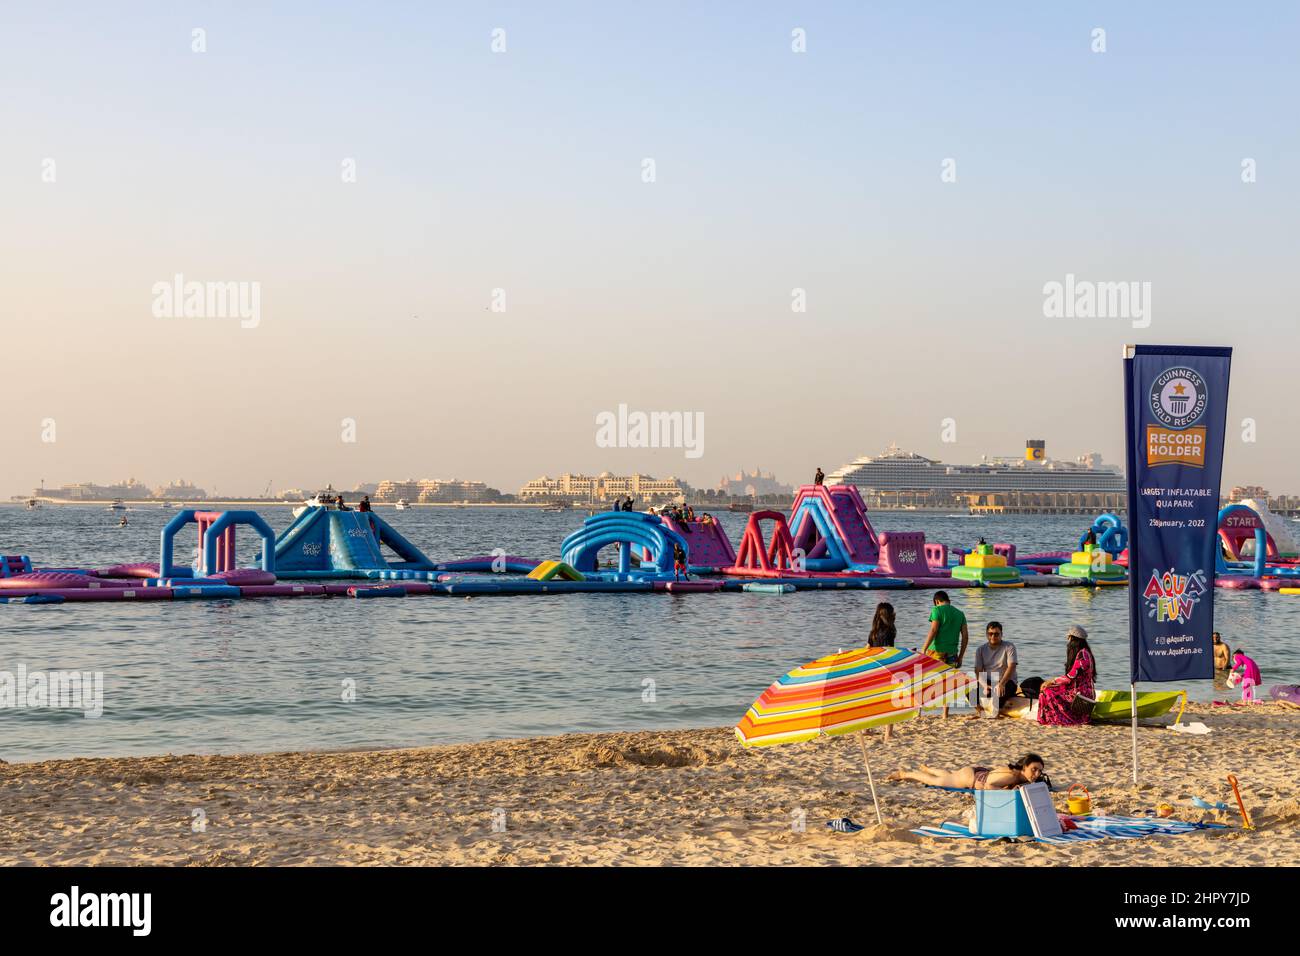 Dubai Marina Beach and aquafun water park, Dubai, United Arab Emirates Stock Photo